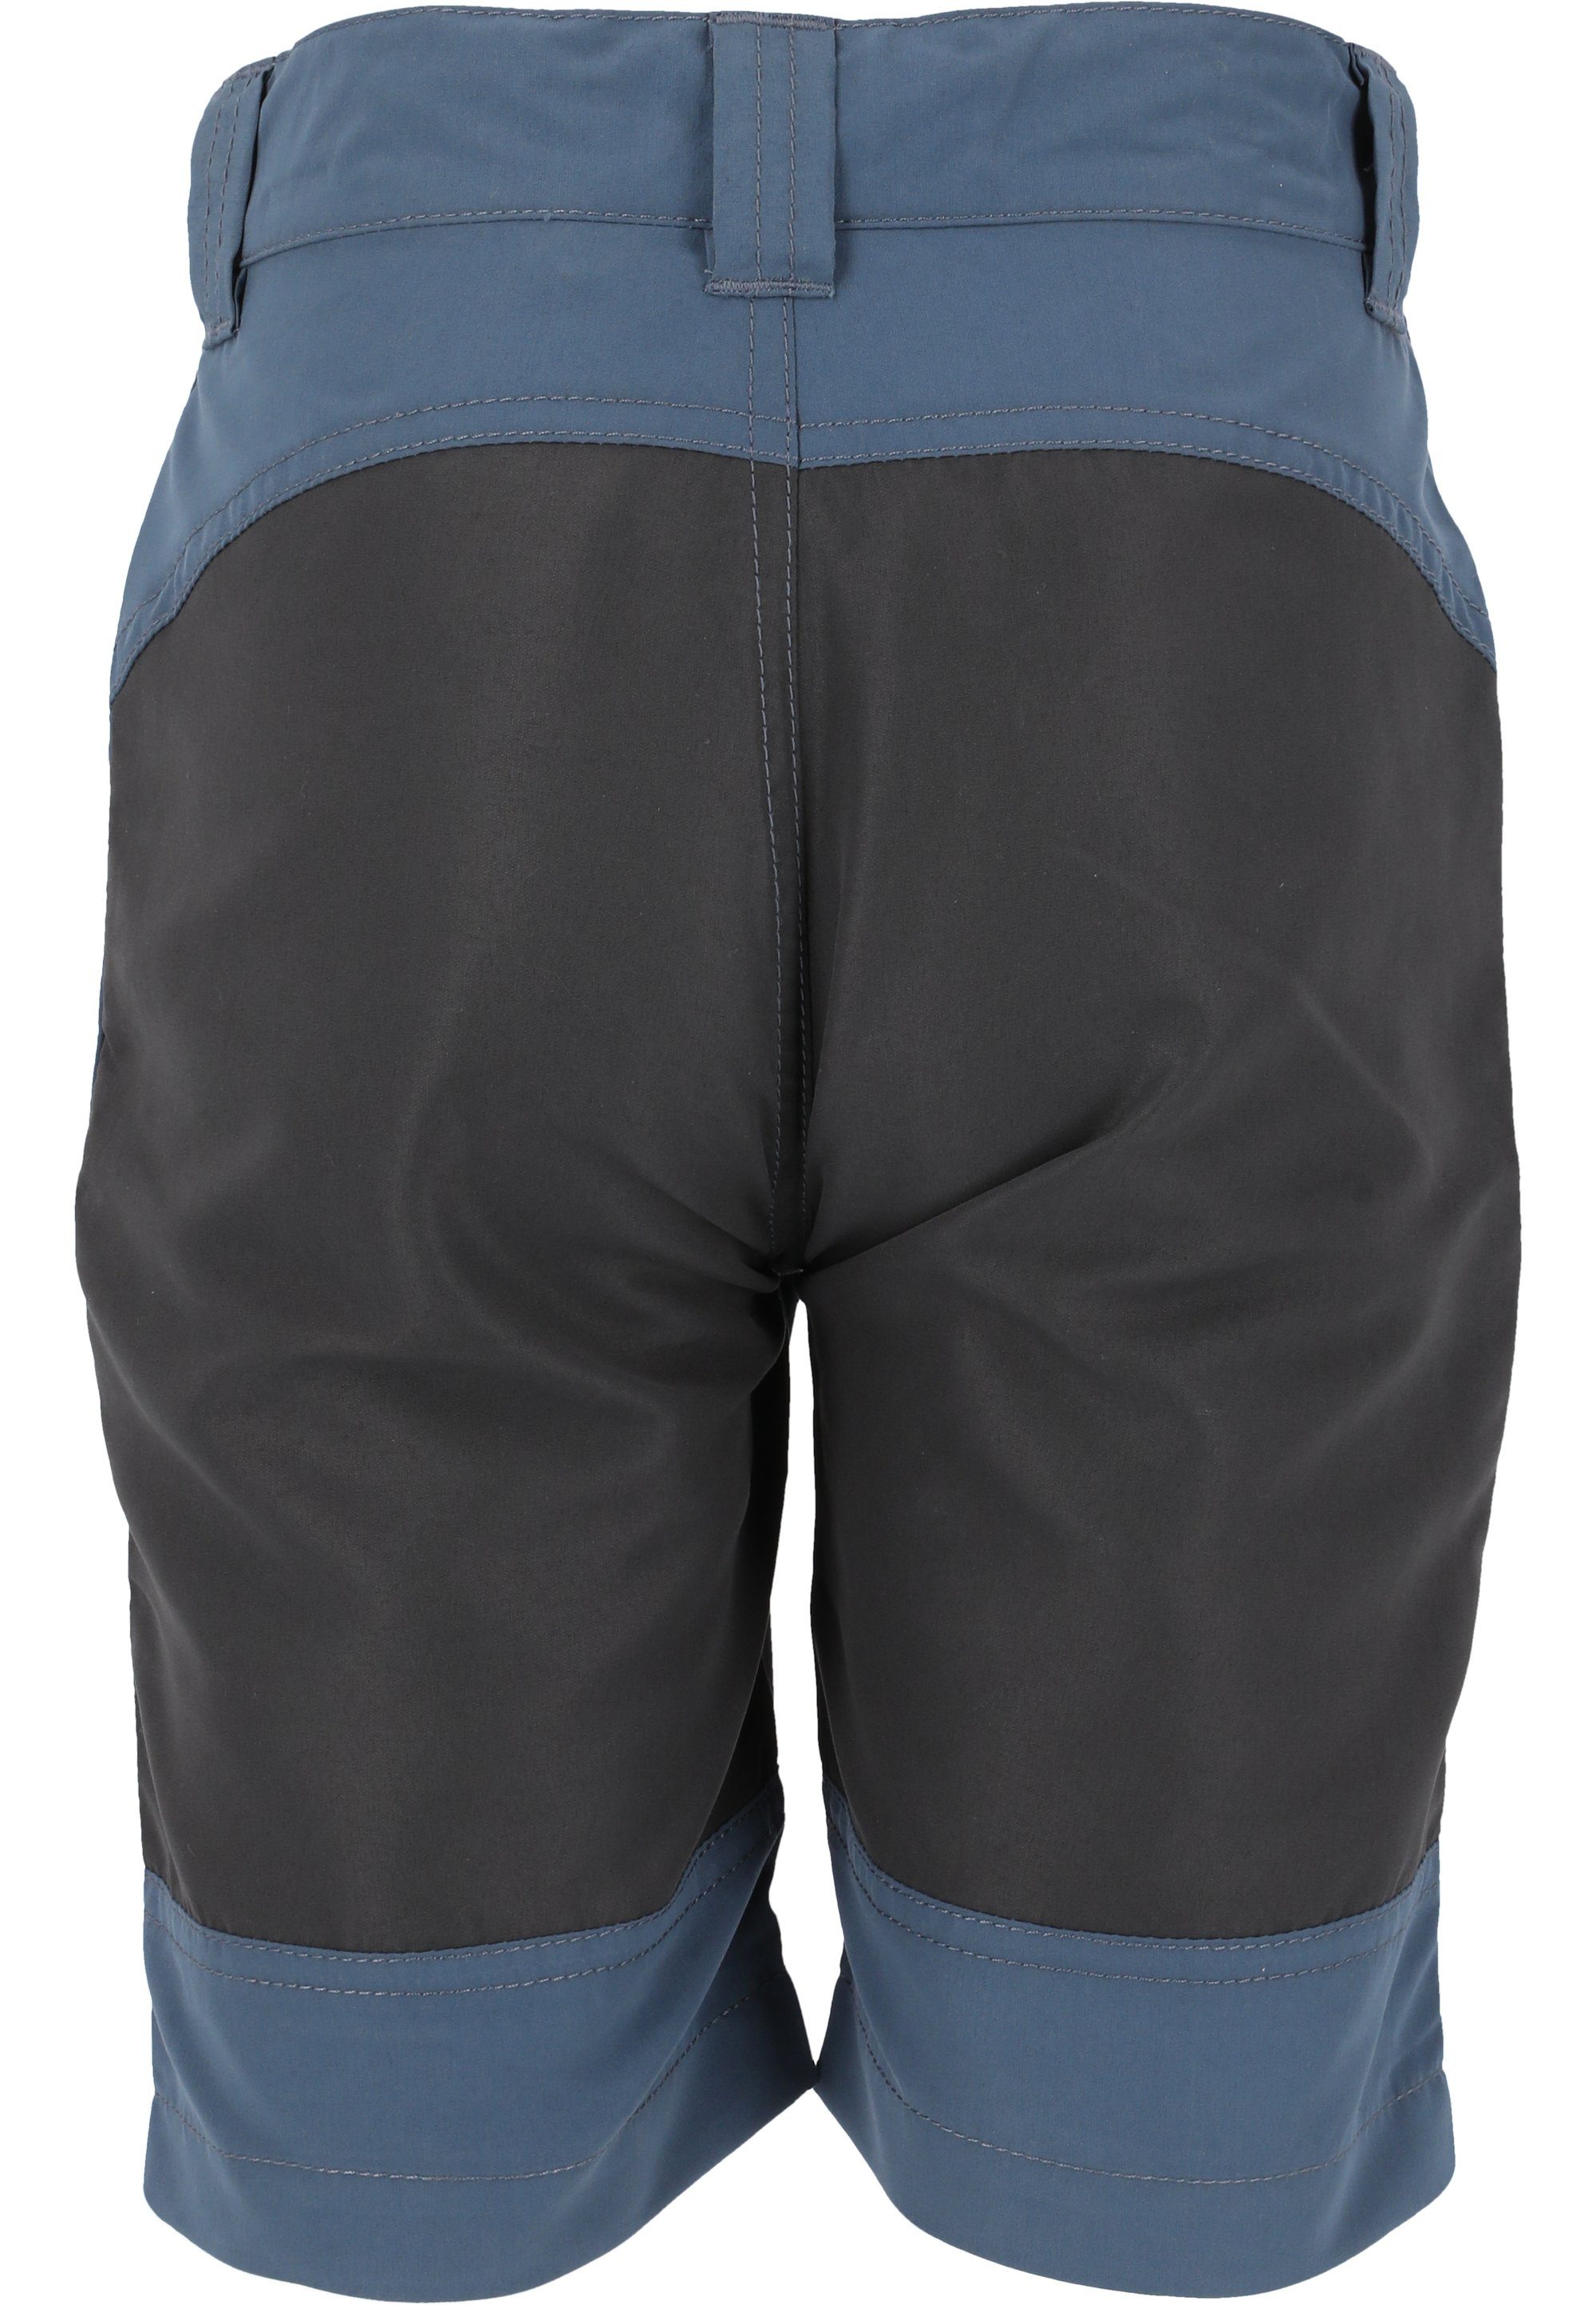 aus robustem ZIGZAG Atlantic Material Shorts blau-schwarz